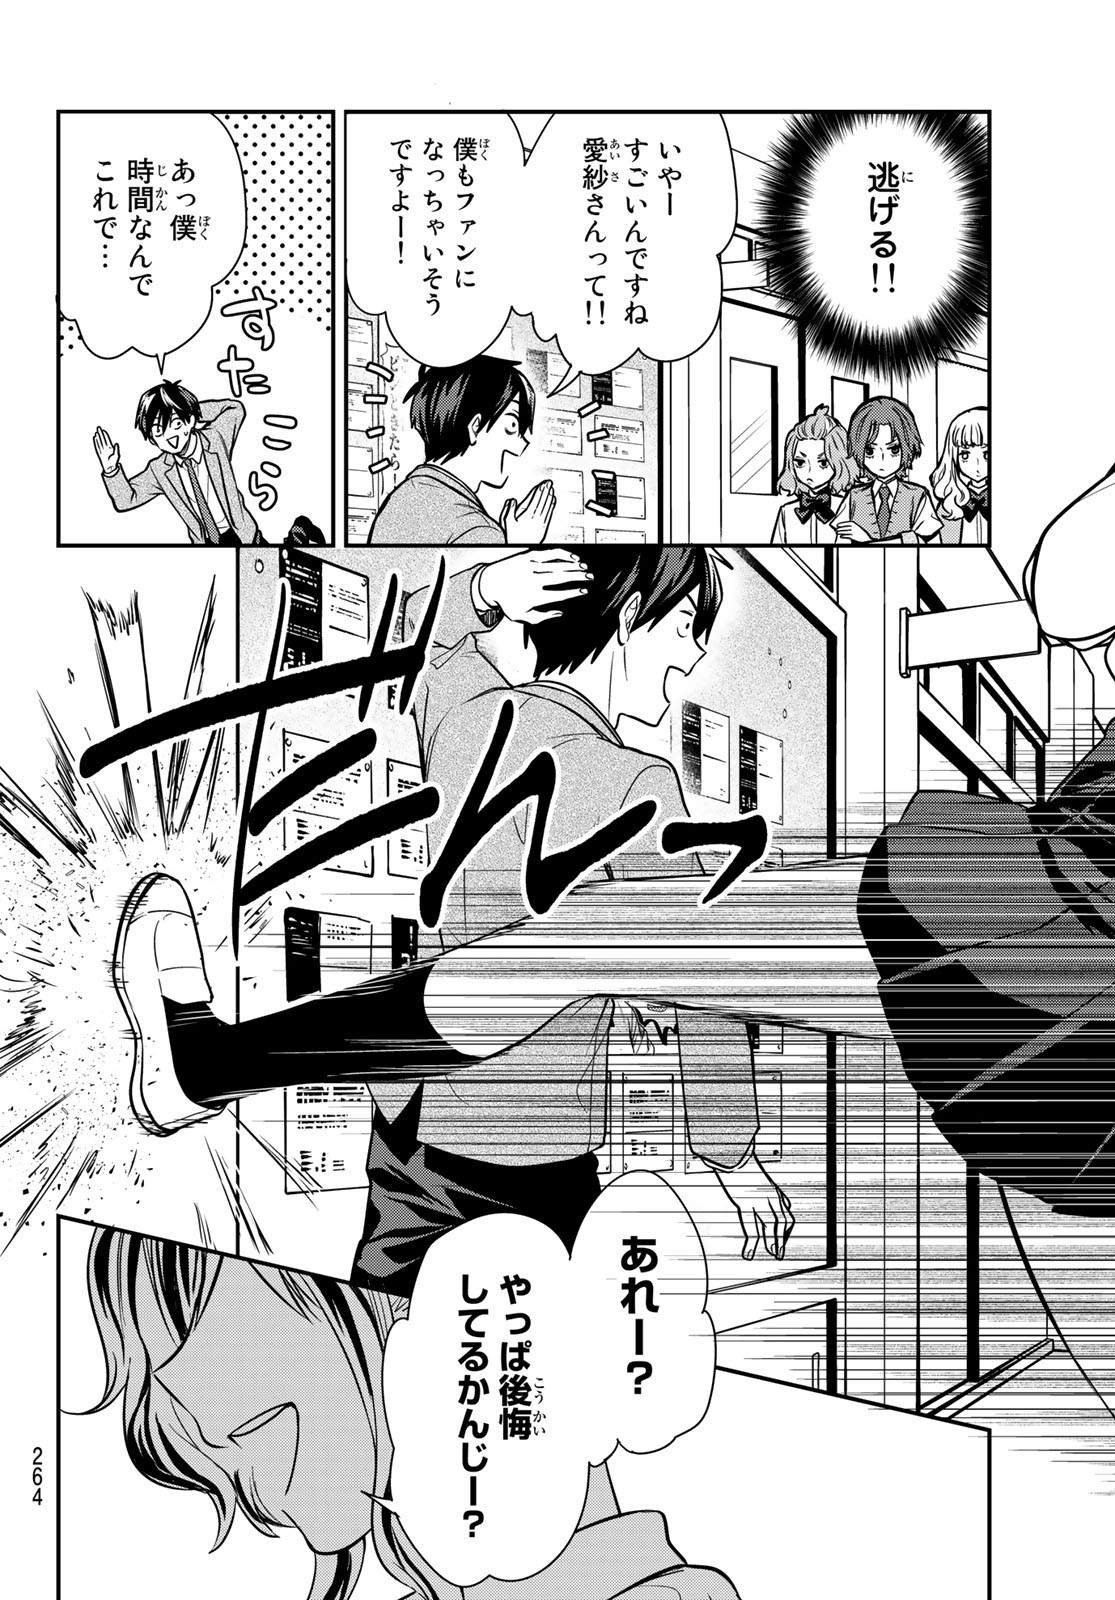 Kimi ga Megami Nara Ii no ni (I Wish You Were My Muse) - Chapter 005 - Page 20